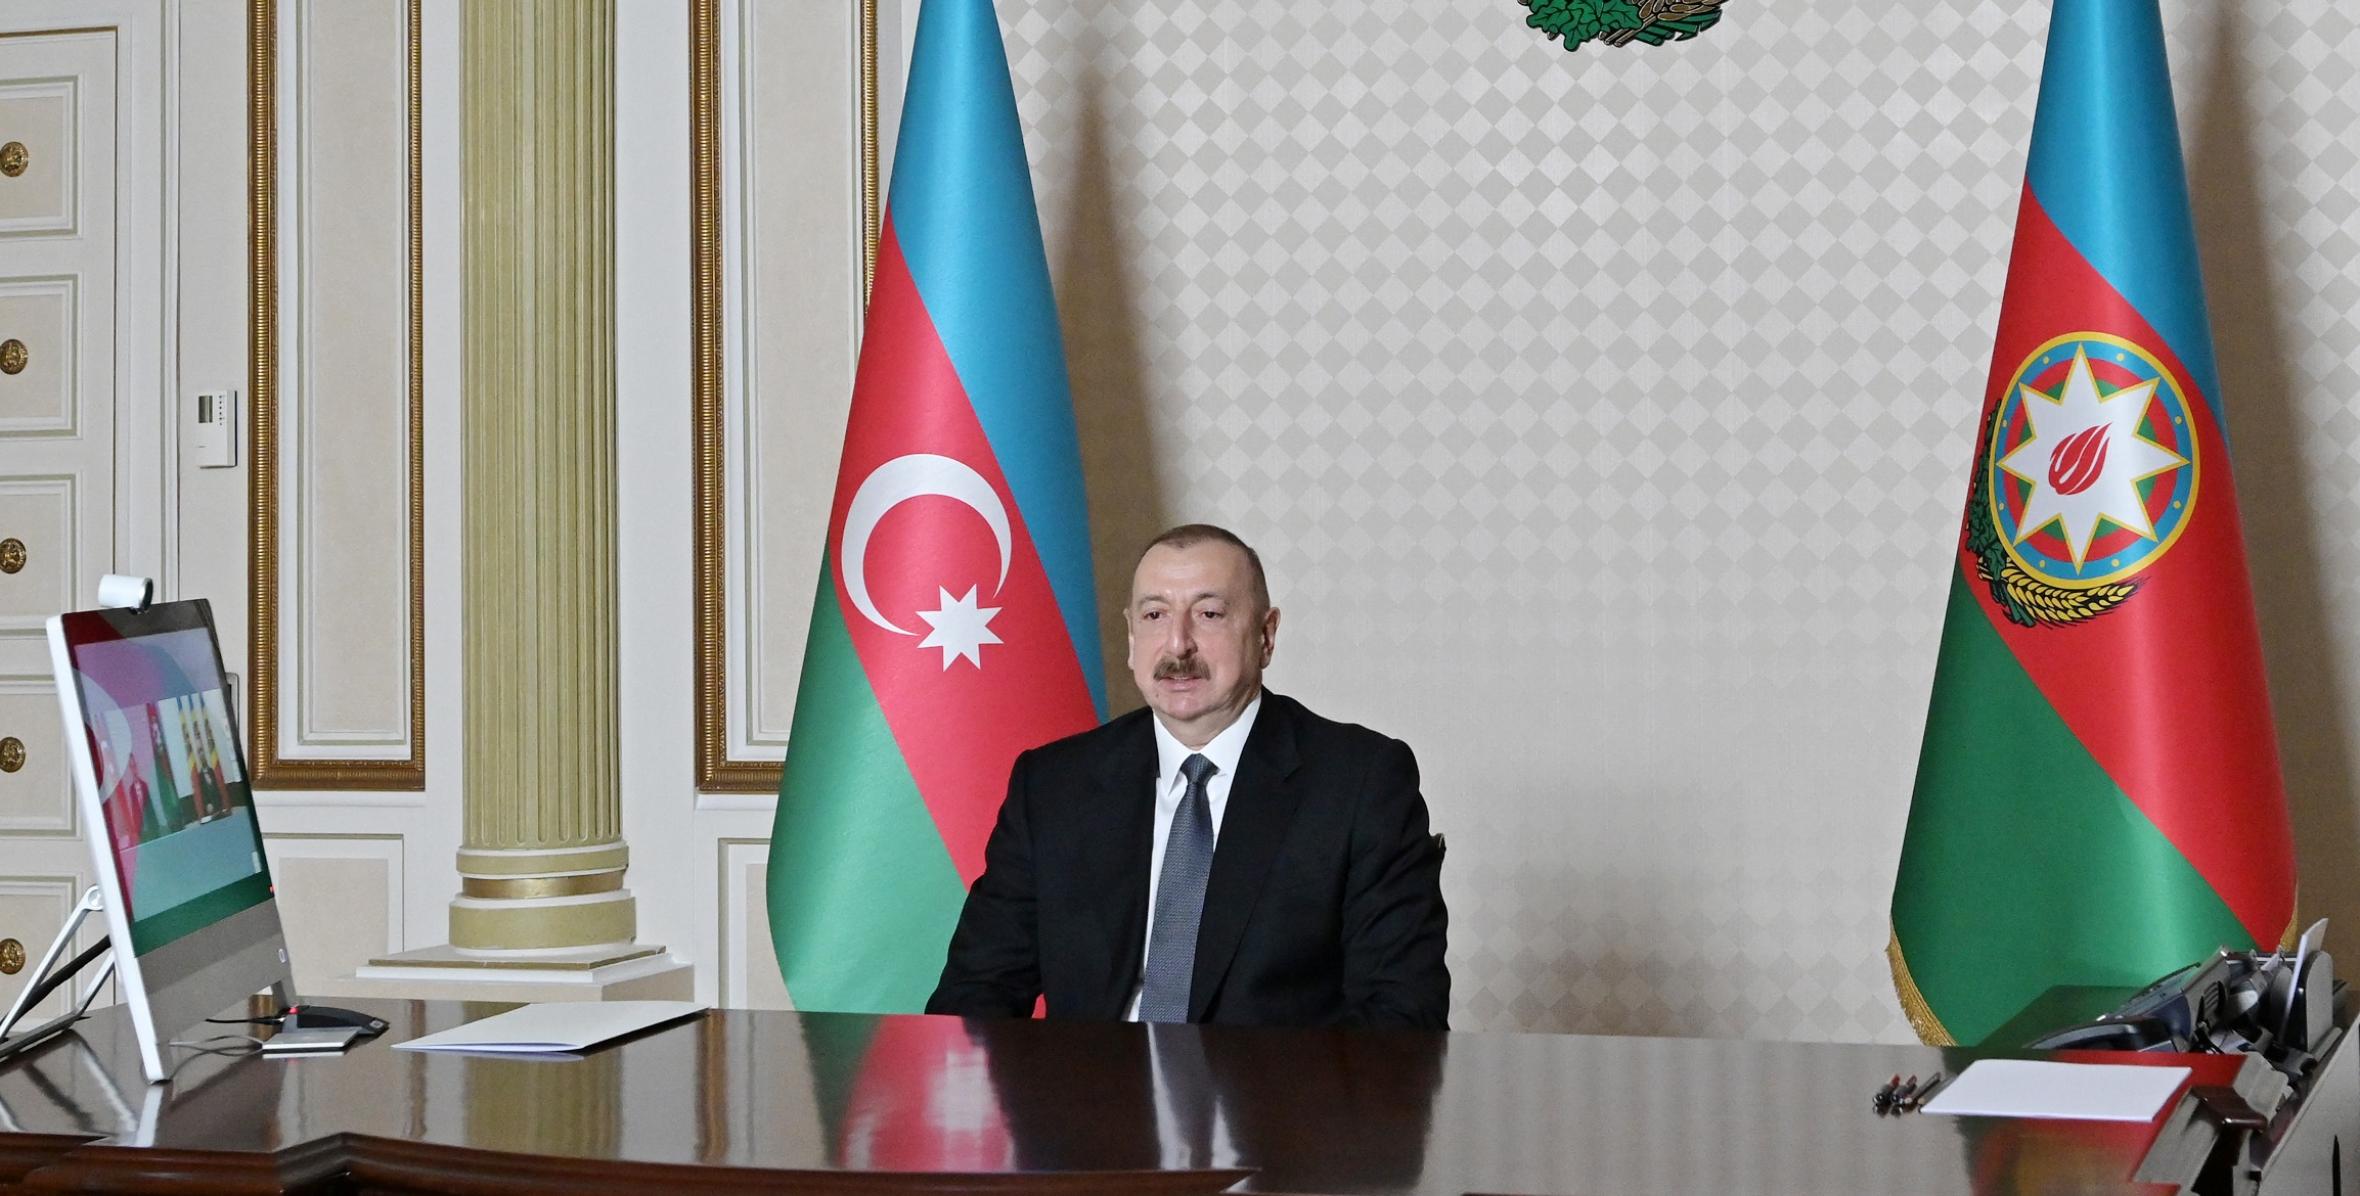 President Ilham Aliyev, Moldovan President Igor Dodon met through videoconferencing